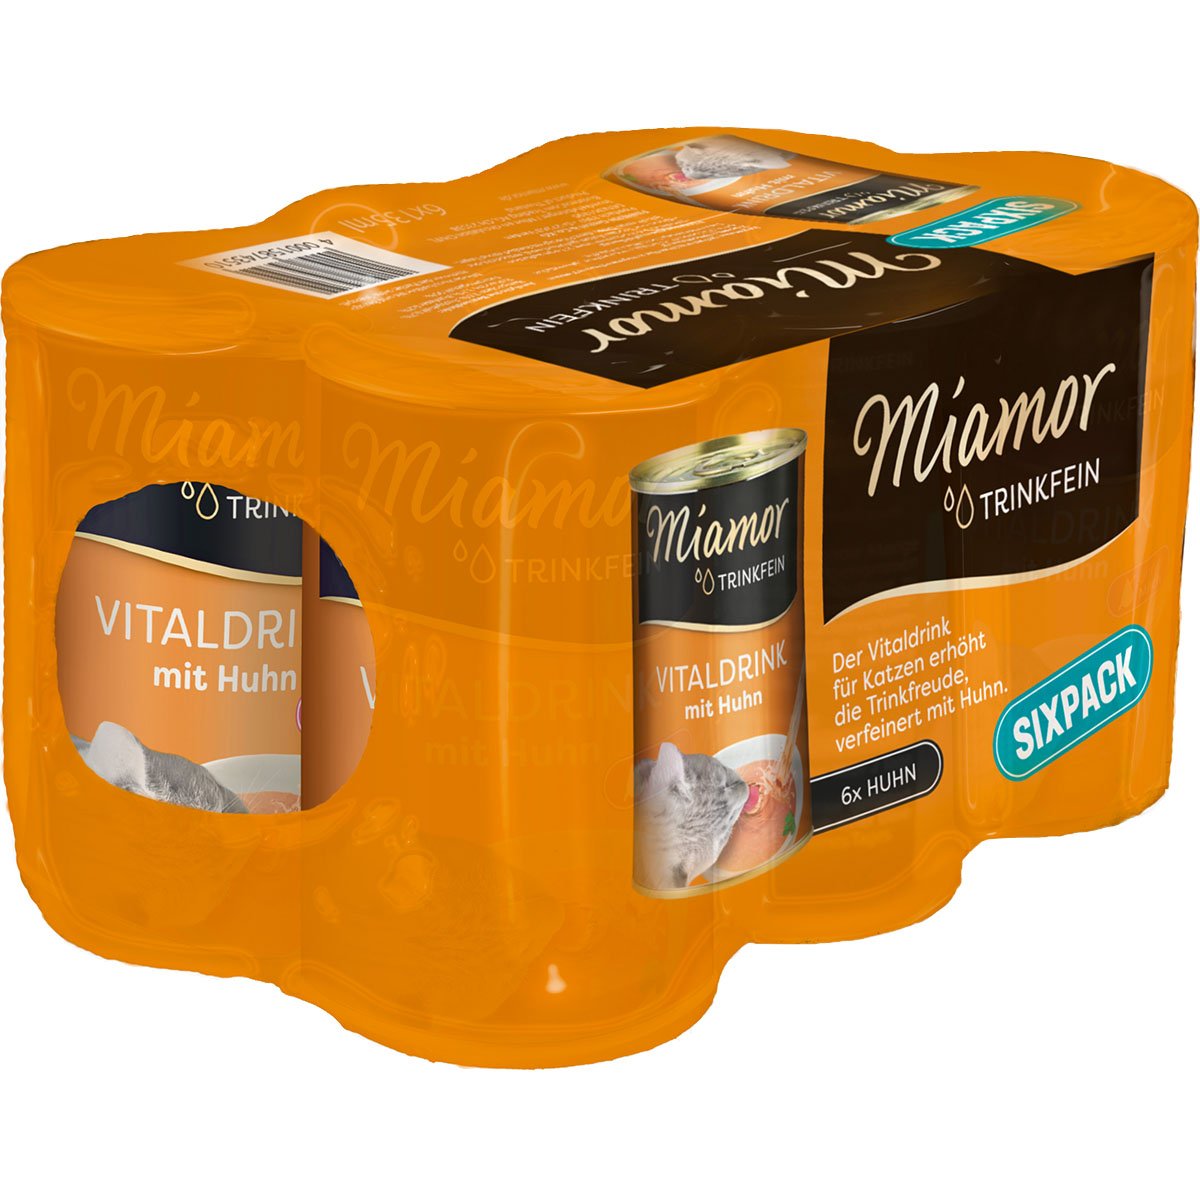 Miamor Trinkfein - Vitaldrink mit Huhn Sixpack 6x135ml von Miamor